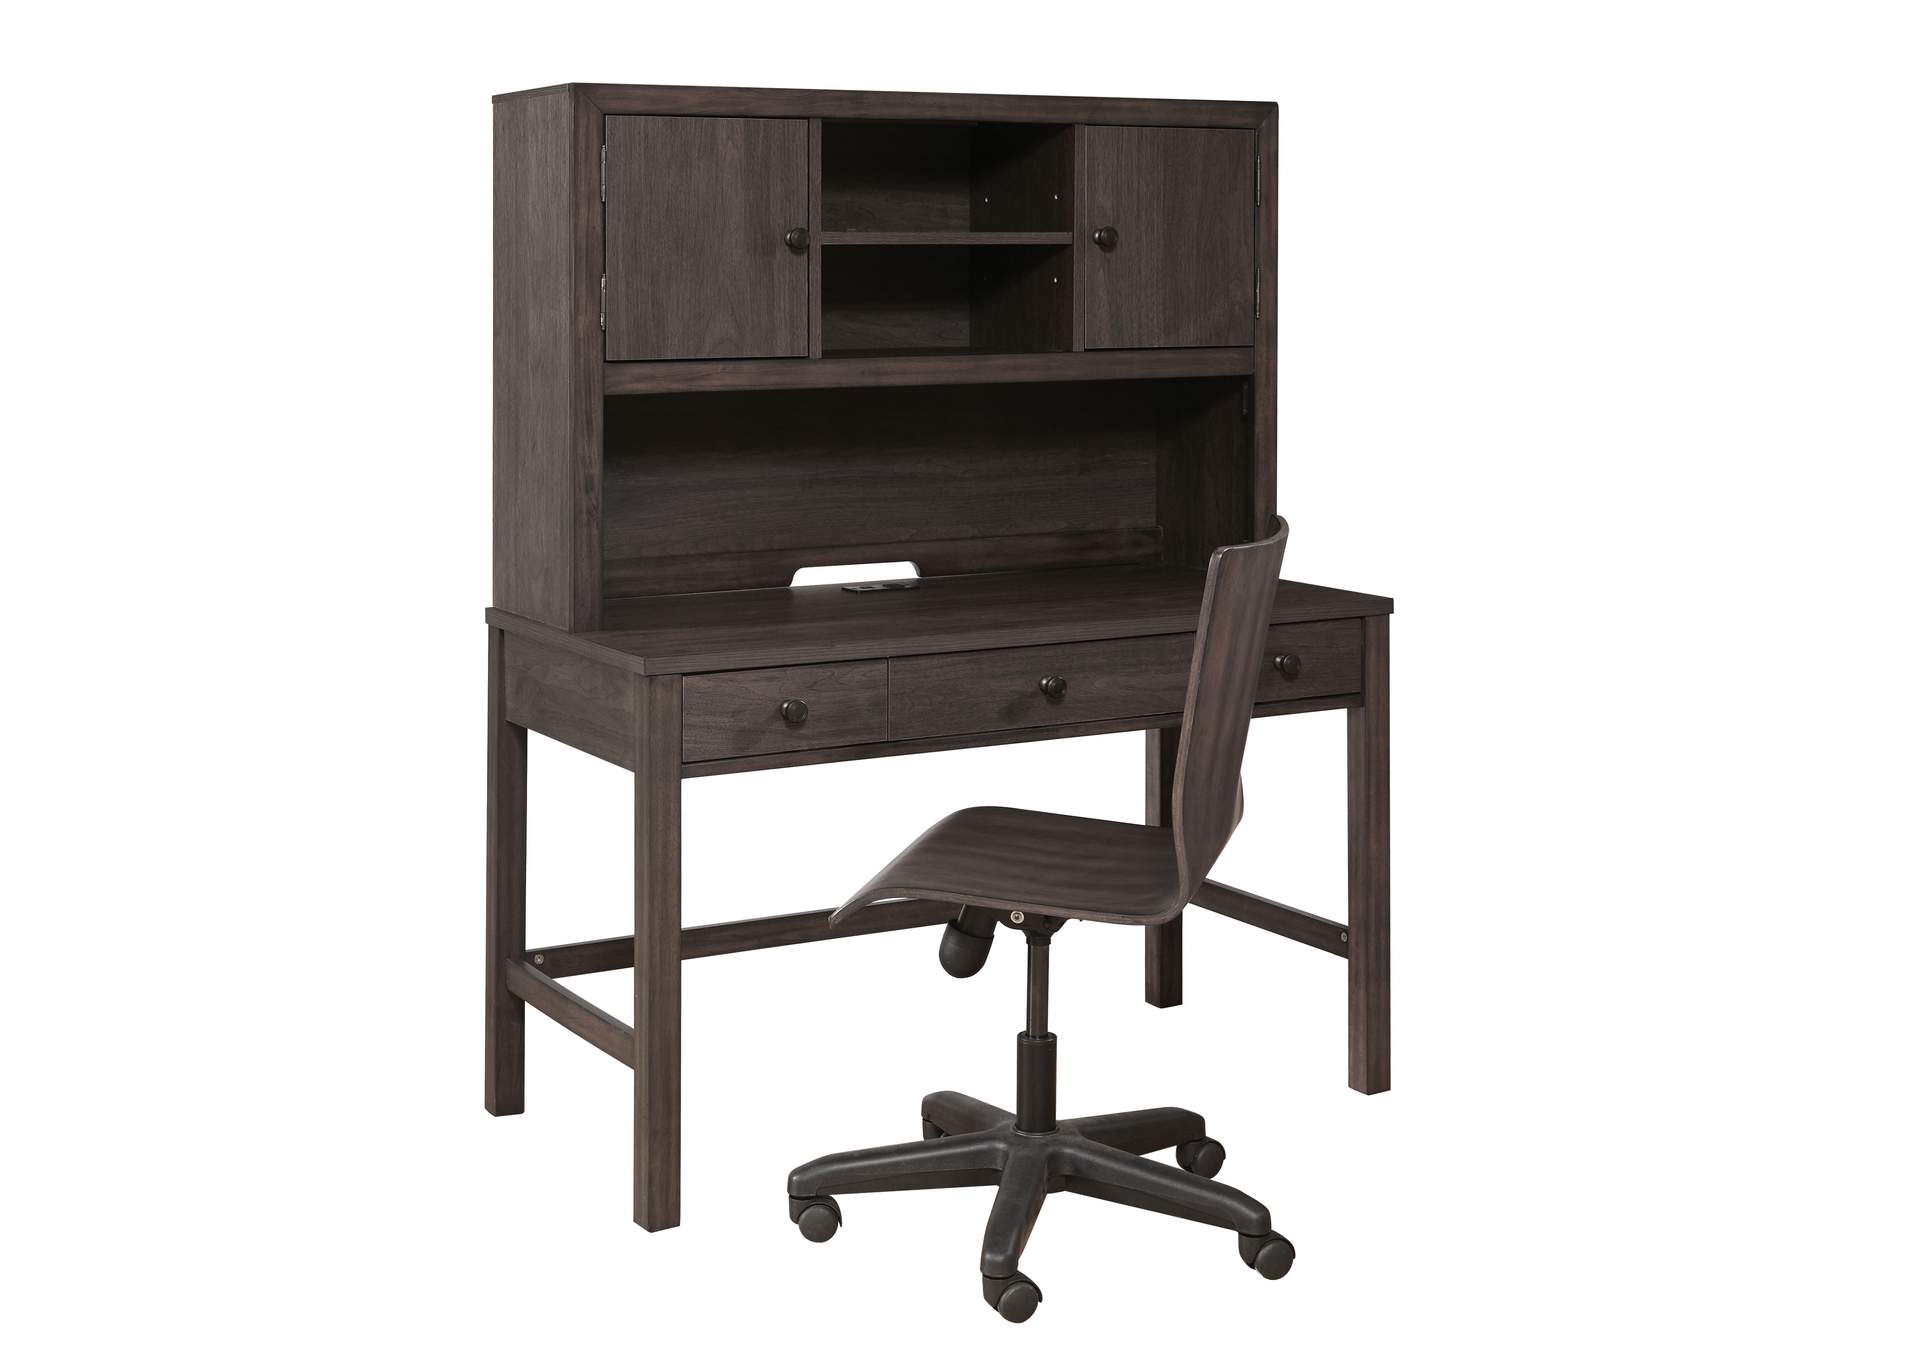 Youth Bedroom Desk Chair in Espresso Brown,Pulaski Furniture